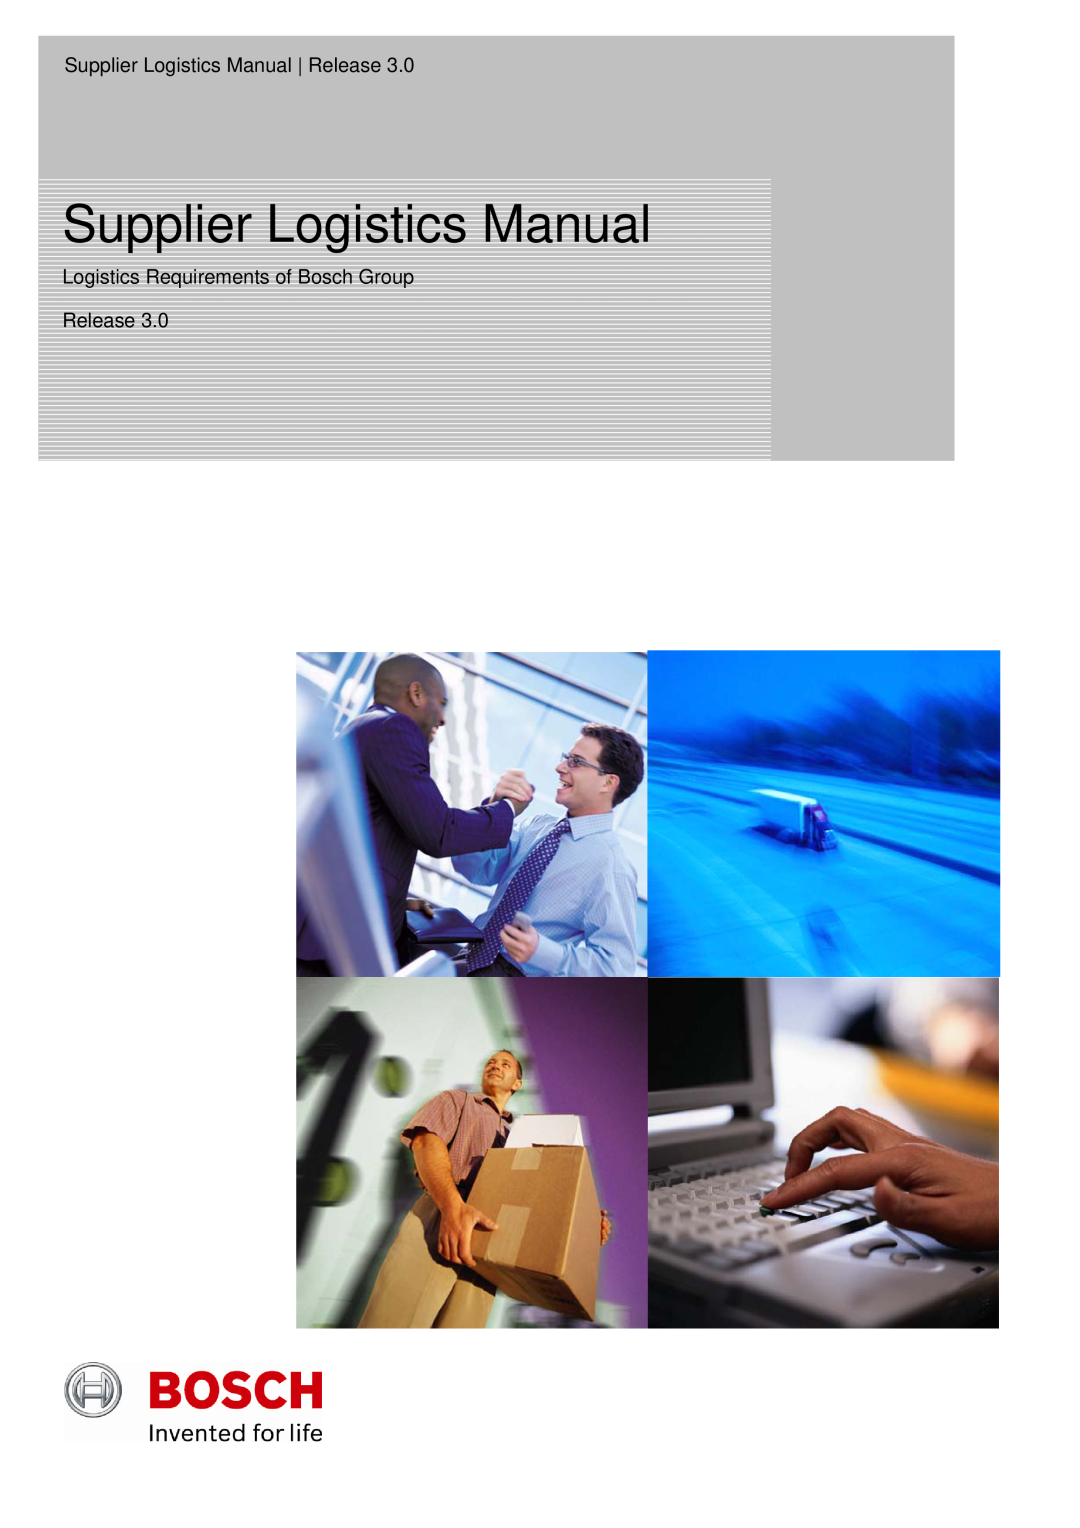 Bosch Appliances 3 manual Supplier Logistics Manual Release, Logistics Requirements of Bosch Group Release 